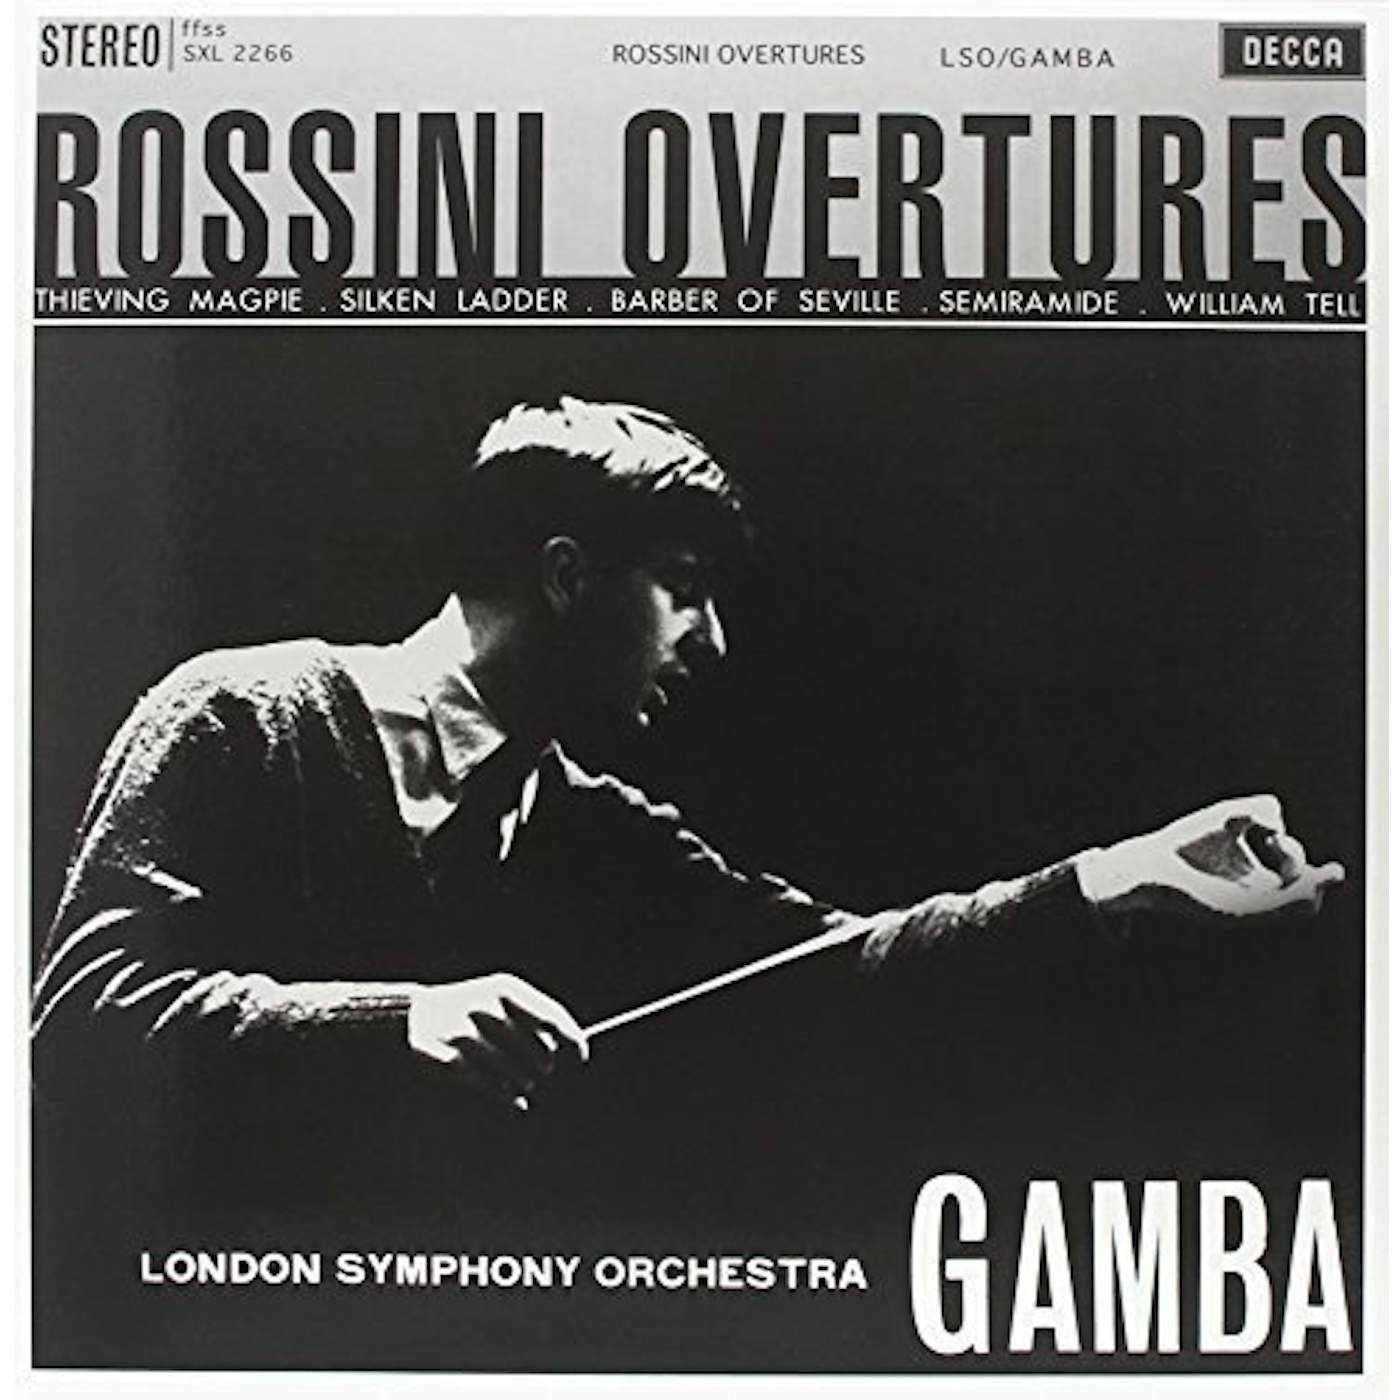 Rossini OVERTURES Vinyl Record